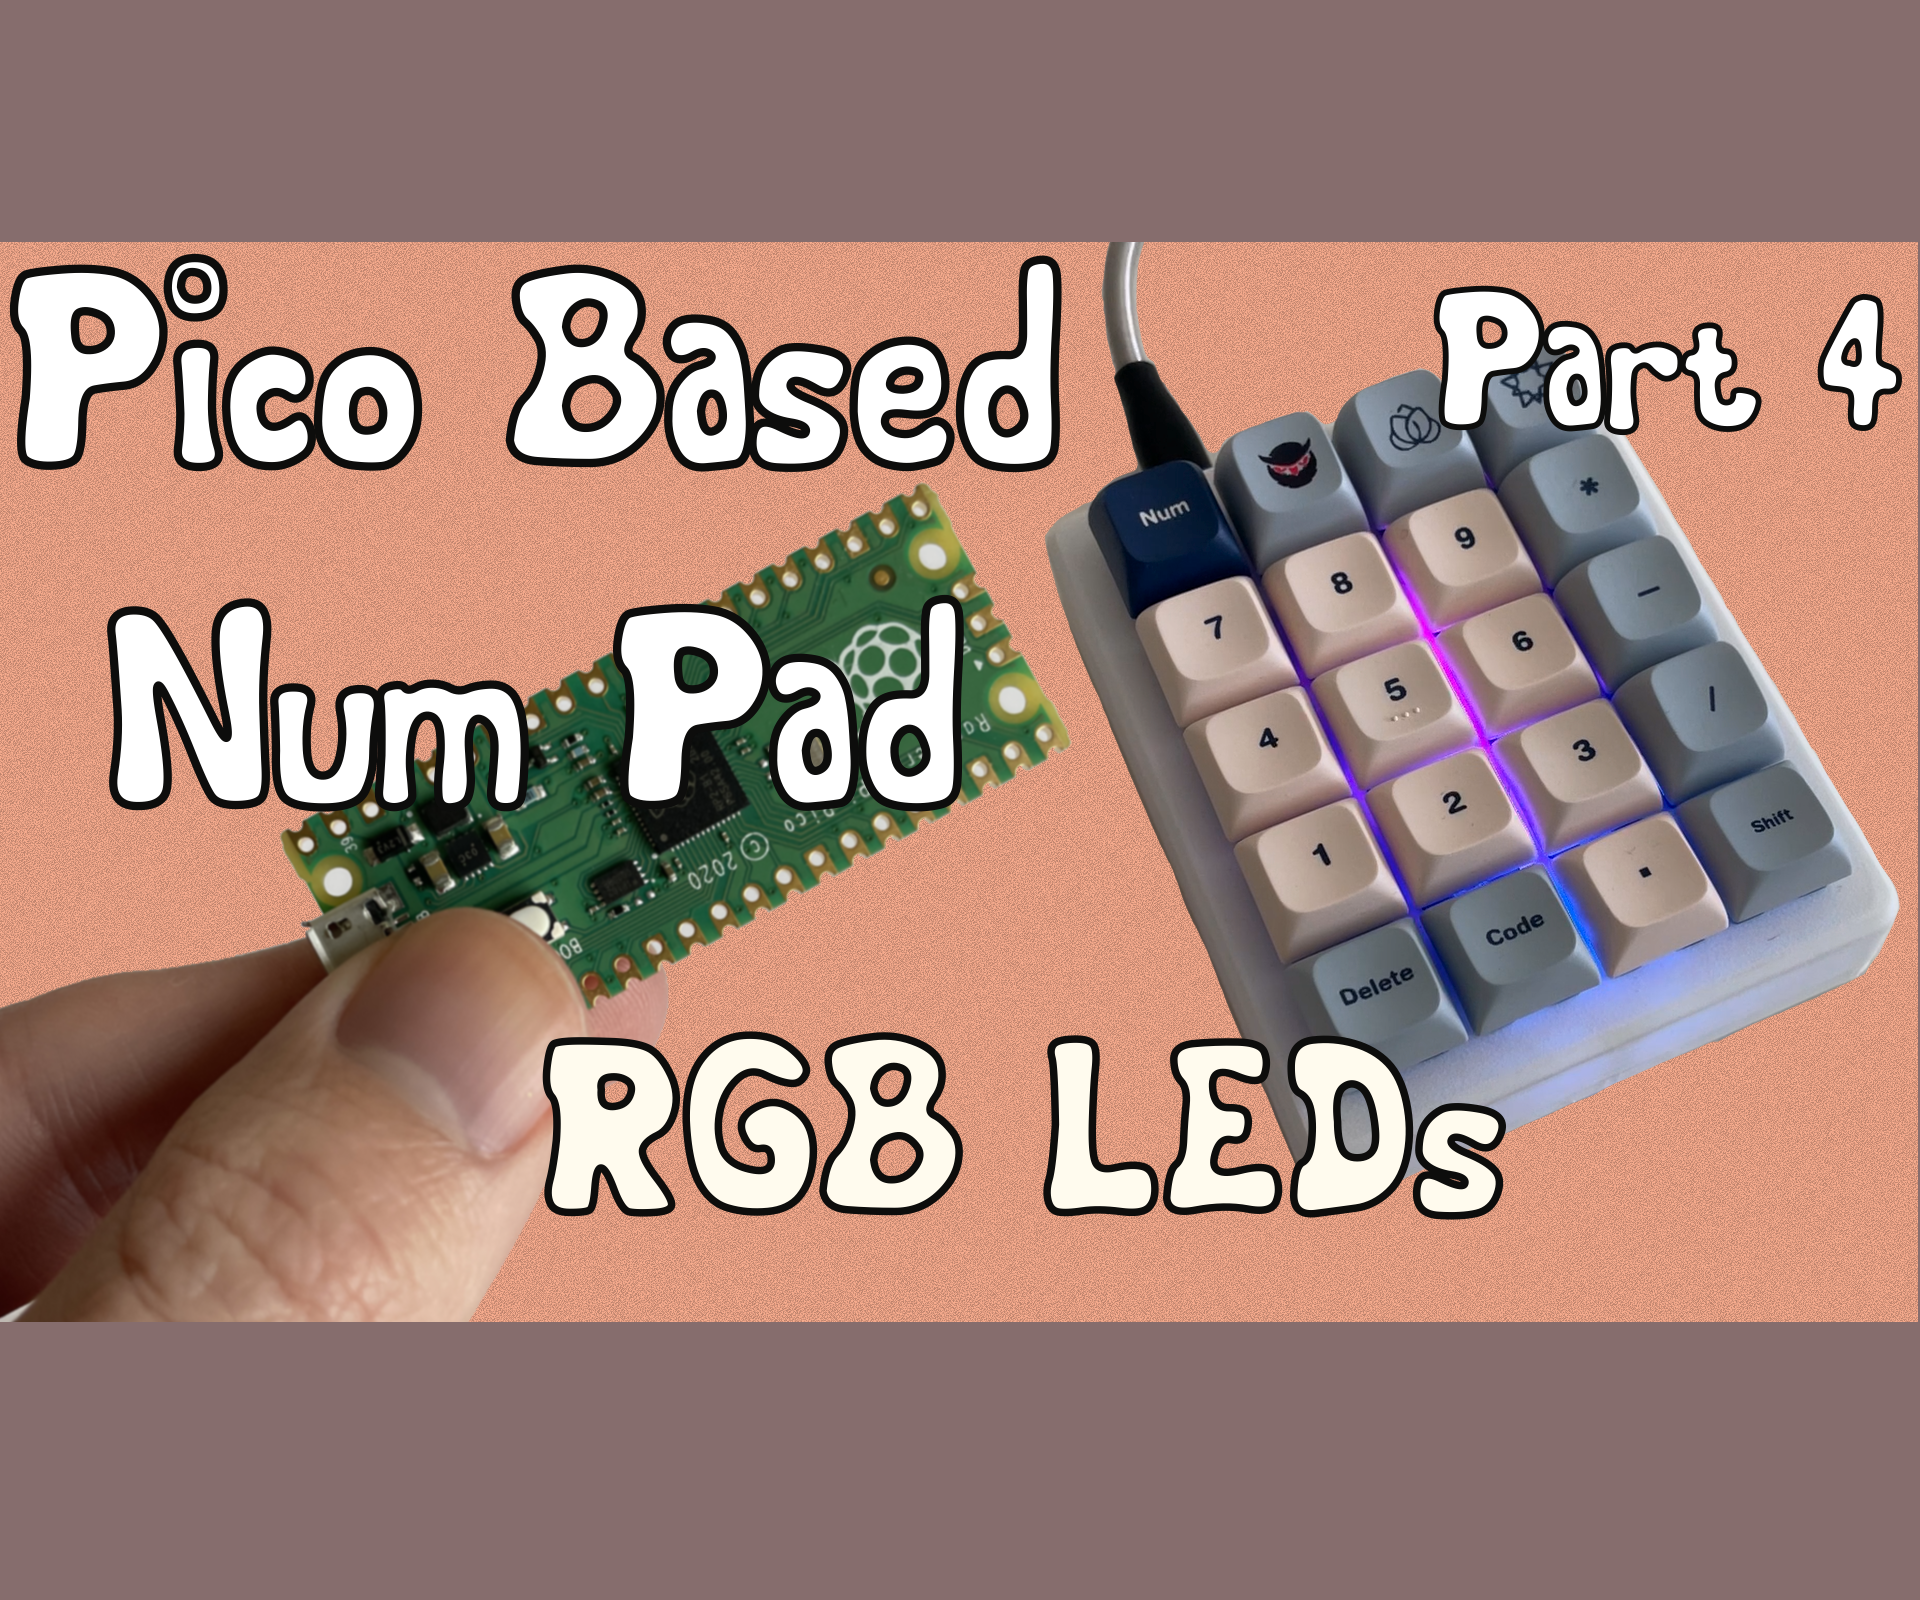 Pico Powered Num Pad - Part 4 - RGB LEDS